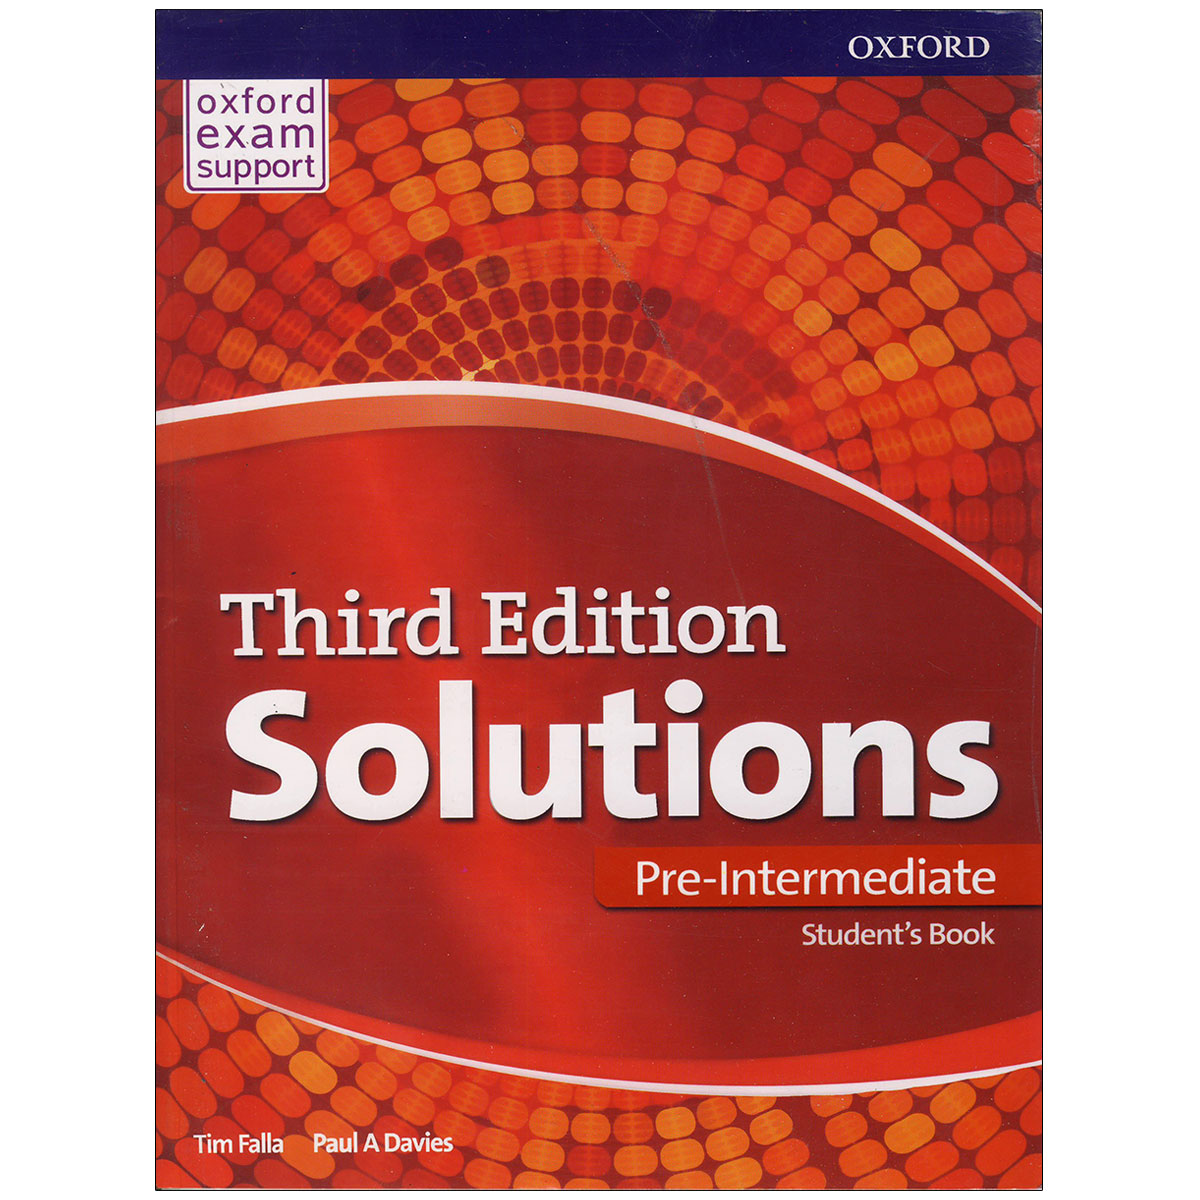 English pre intermediate. Solutions pre-Intermediate 3rd. Third Edition solutions Workbook Oxford. Солюшенс пре интермедиат 3 издание. Solutions_3rd_pre-INT_WB.